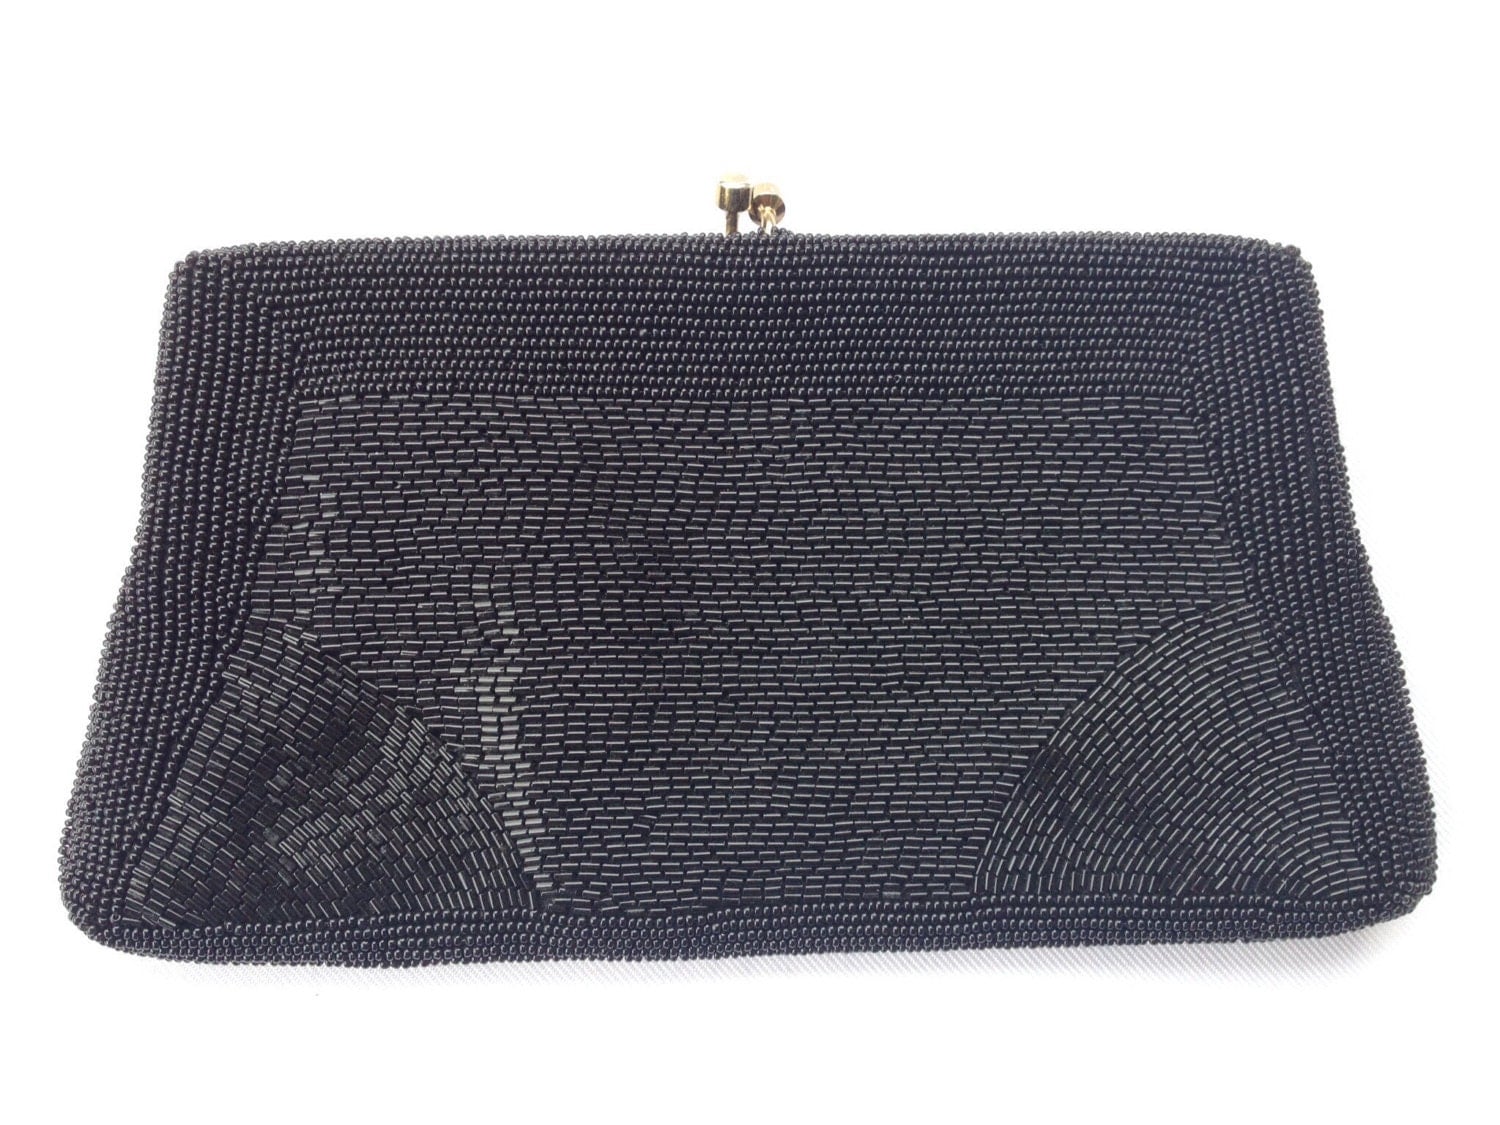 Vintage La Regale Black Beaded Clutch Evening Bag by SixpenceBride